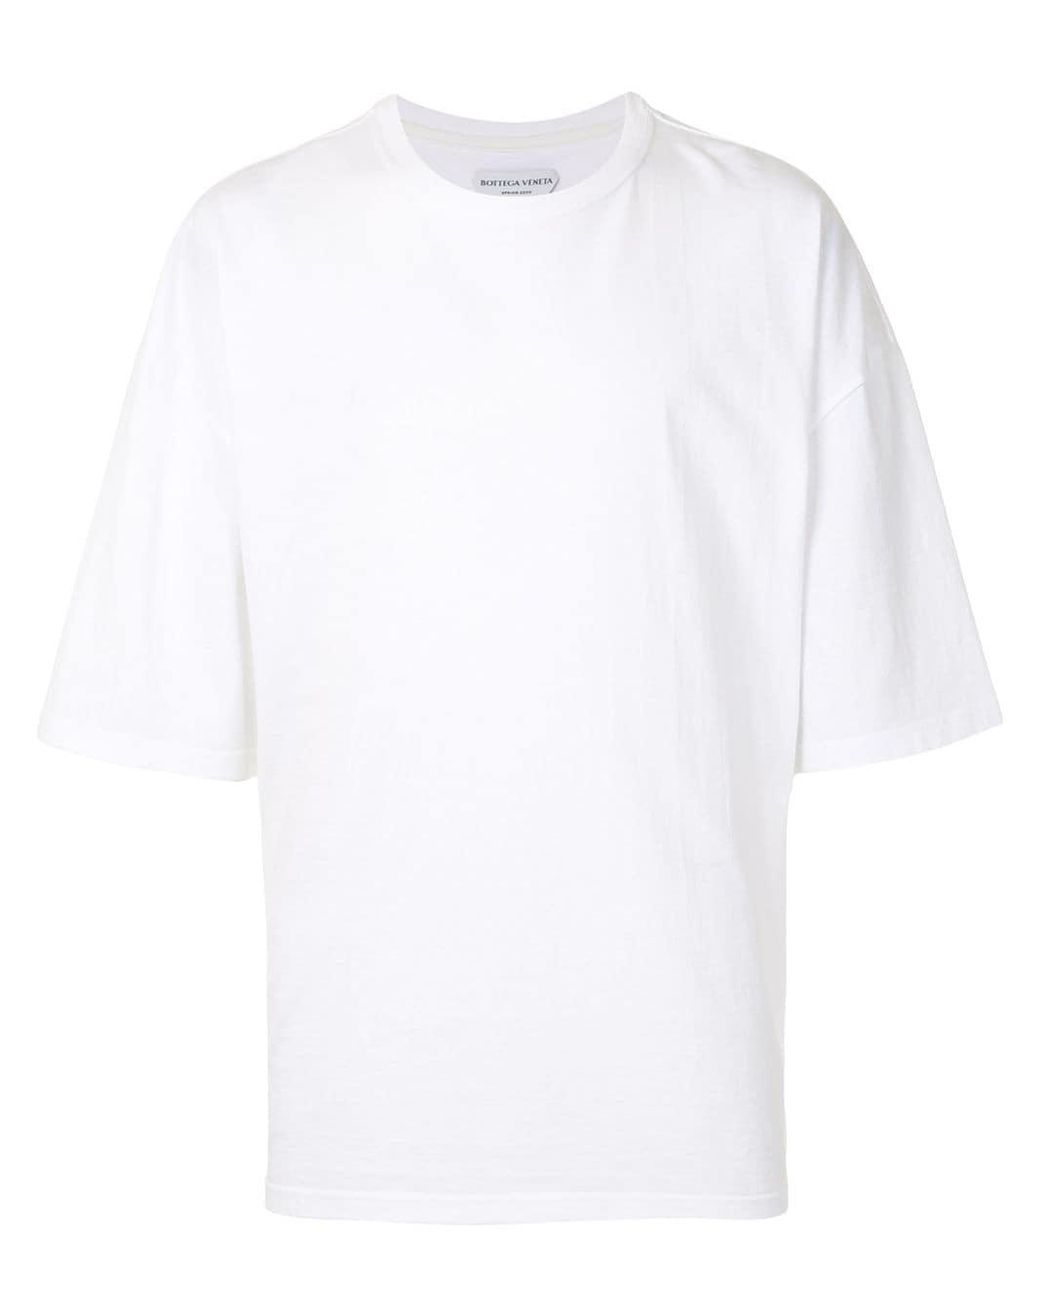 Bottega Veneta Cotton Loose Fit T-shirt in White for Men - Lyst